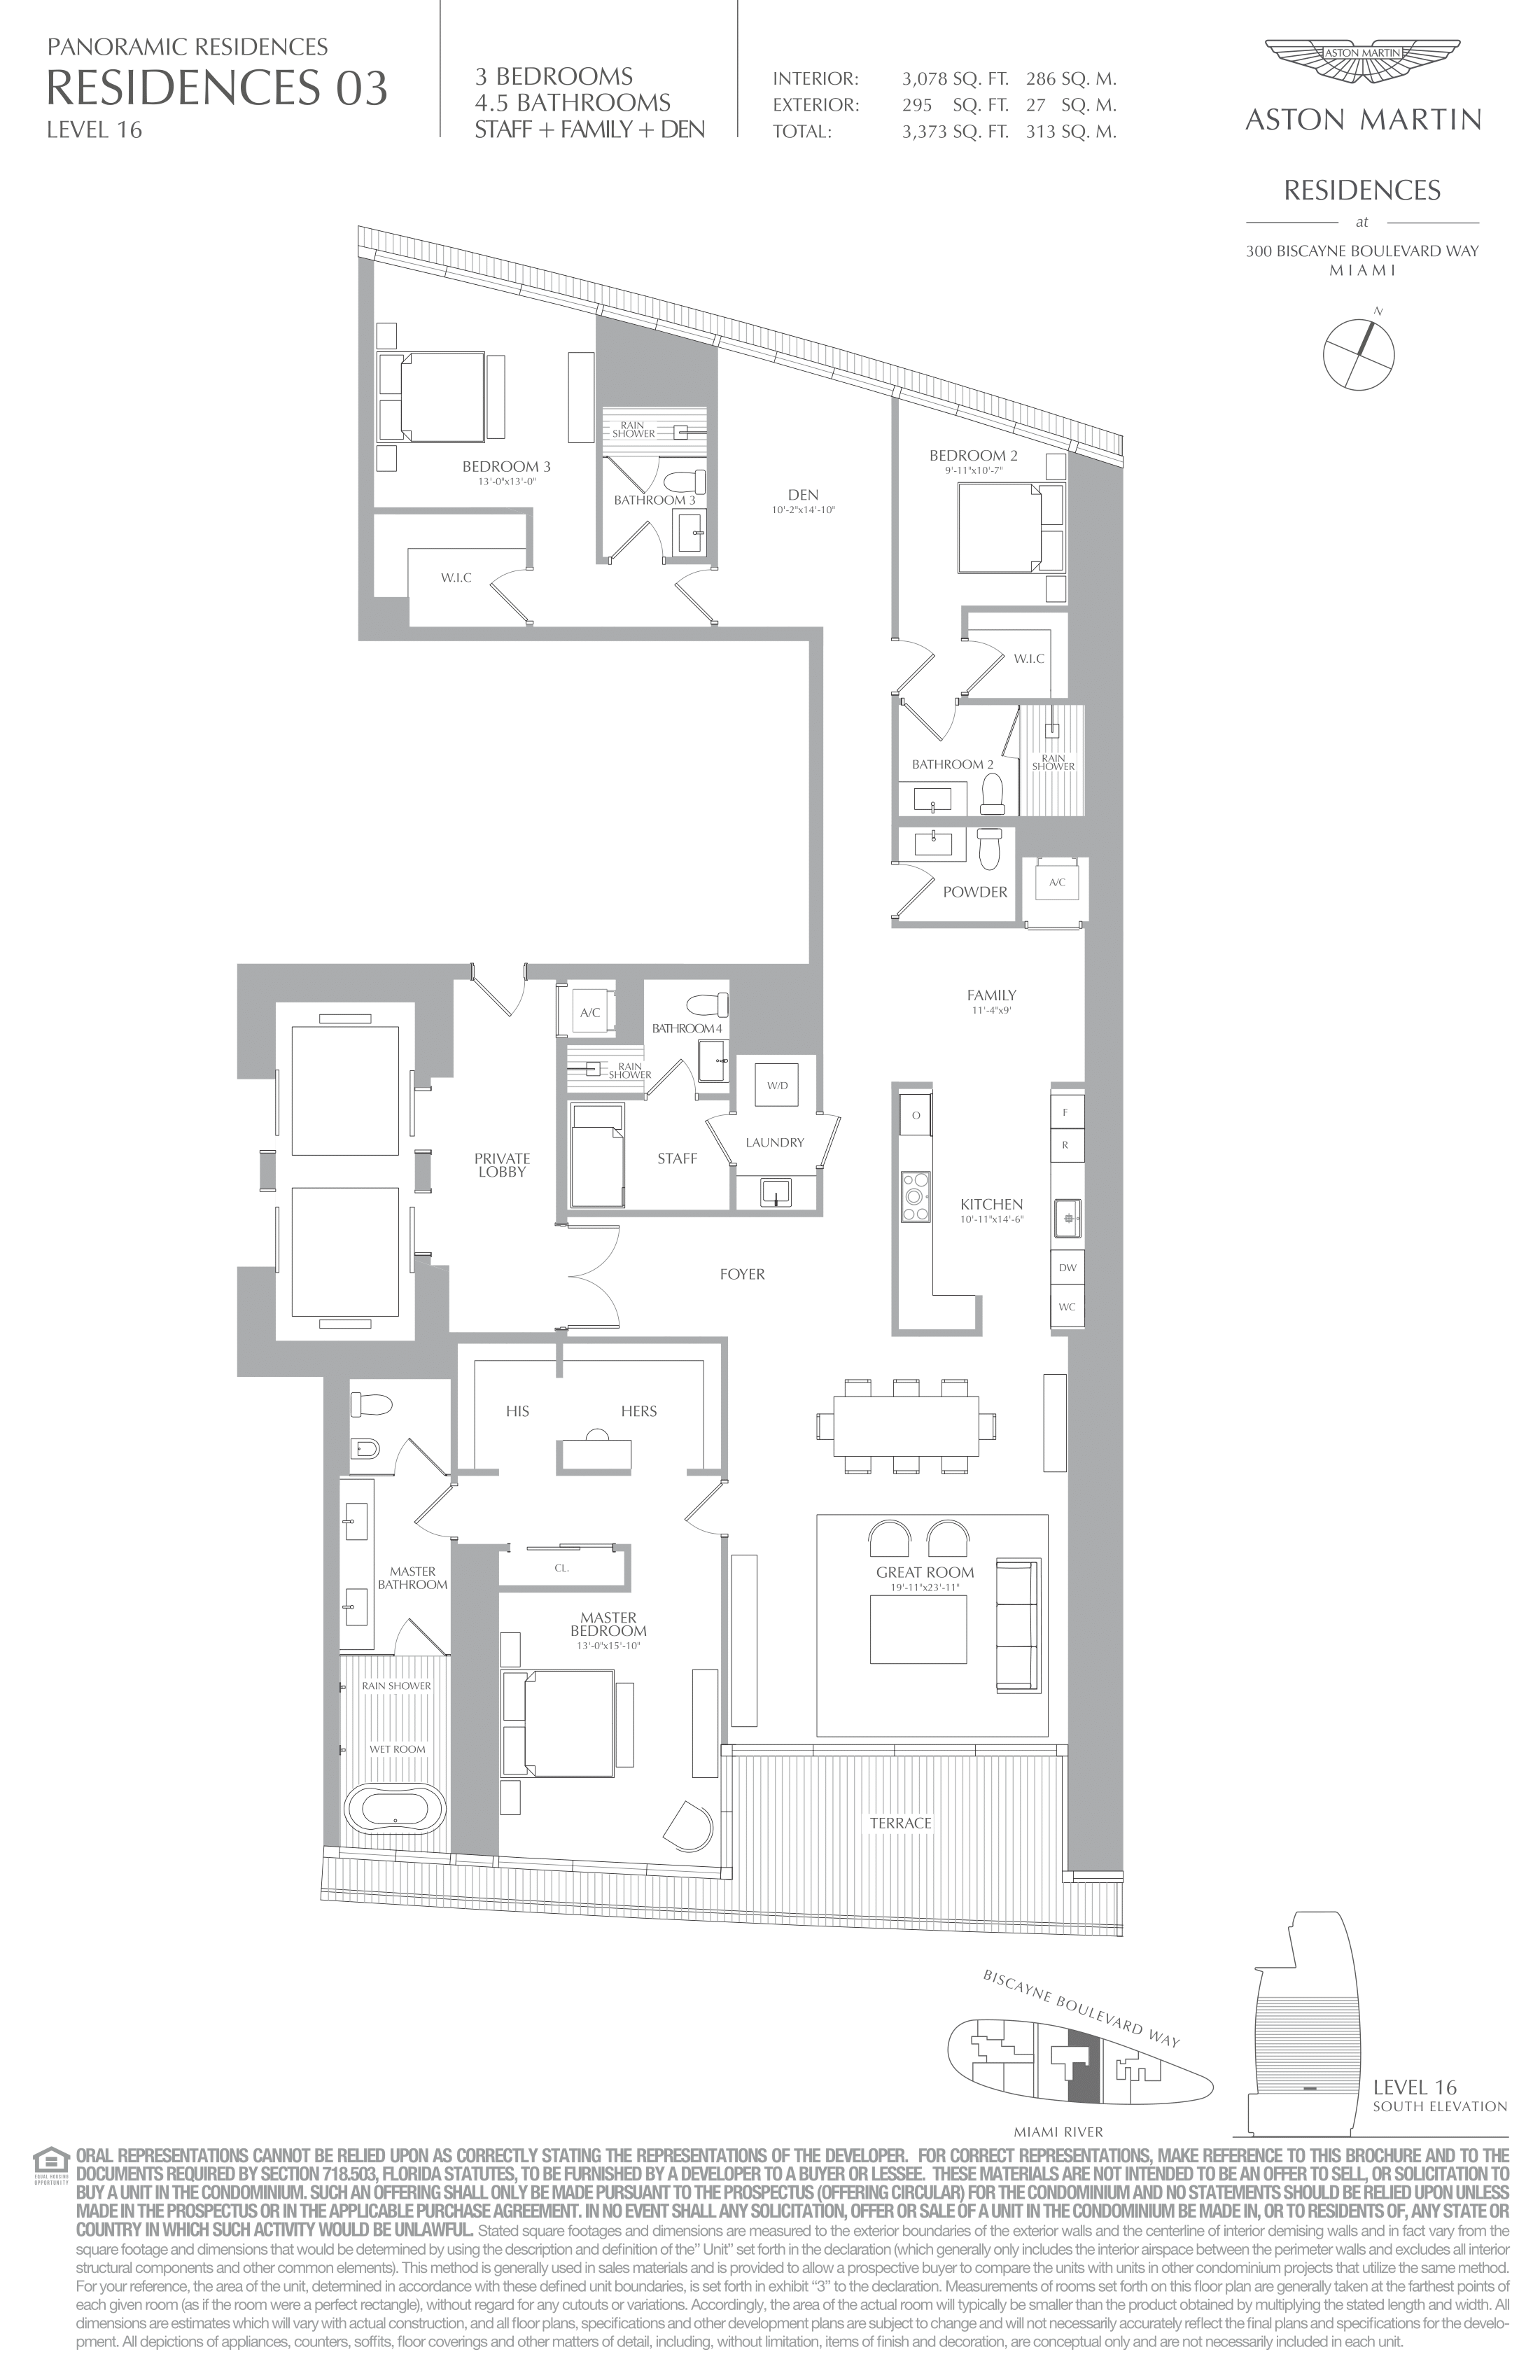 Residence 03 - Level 16